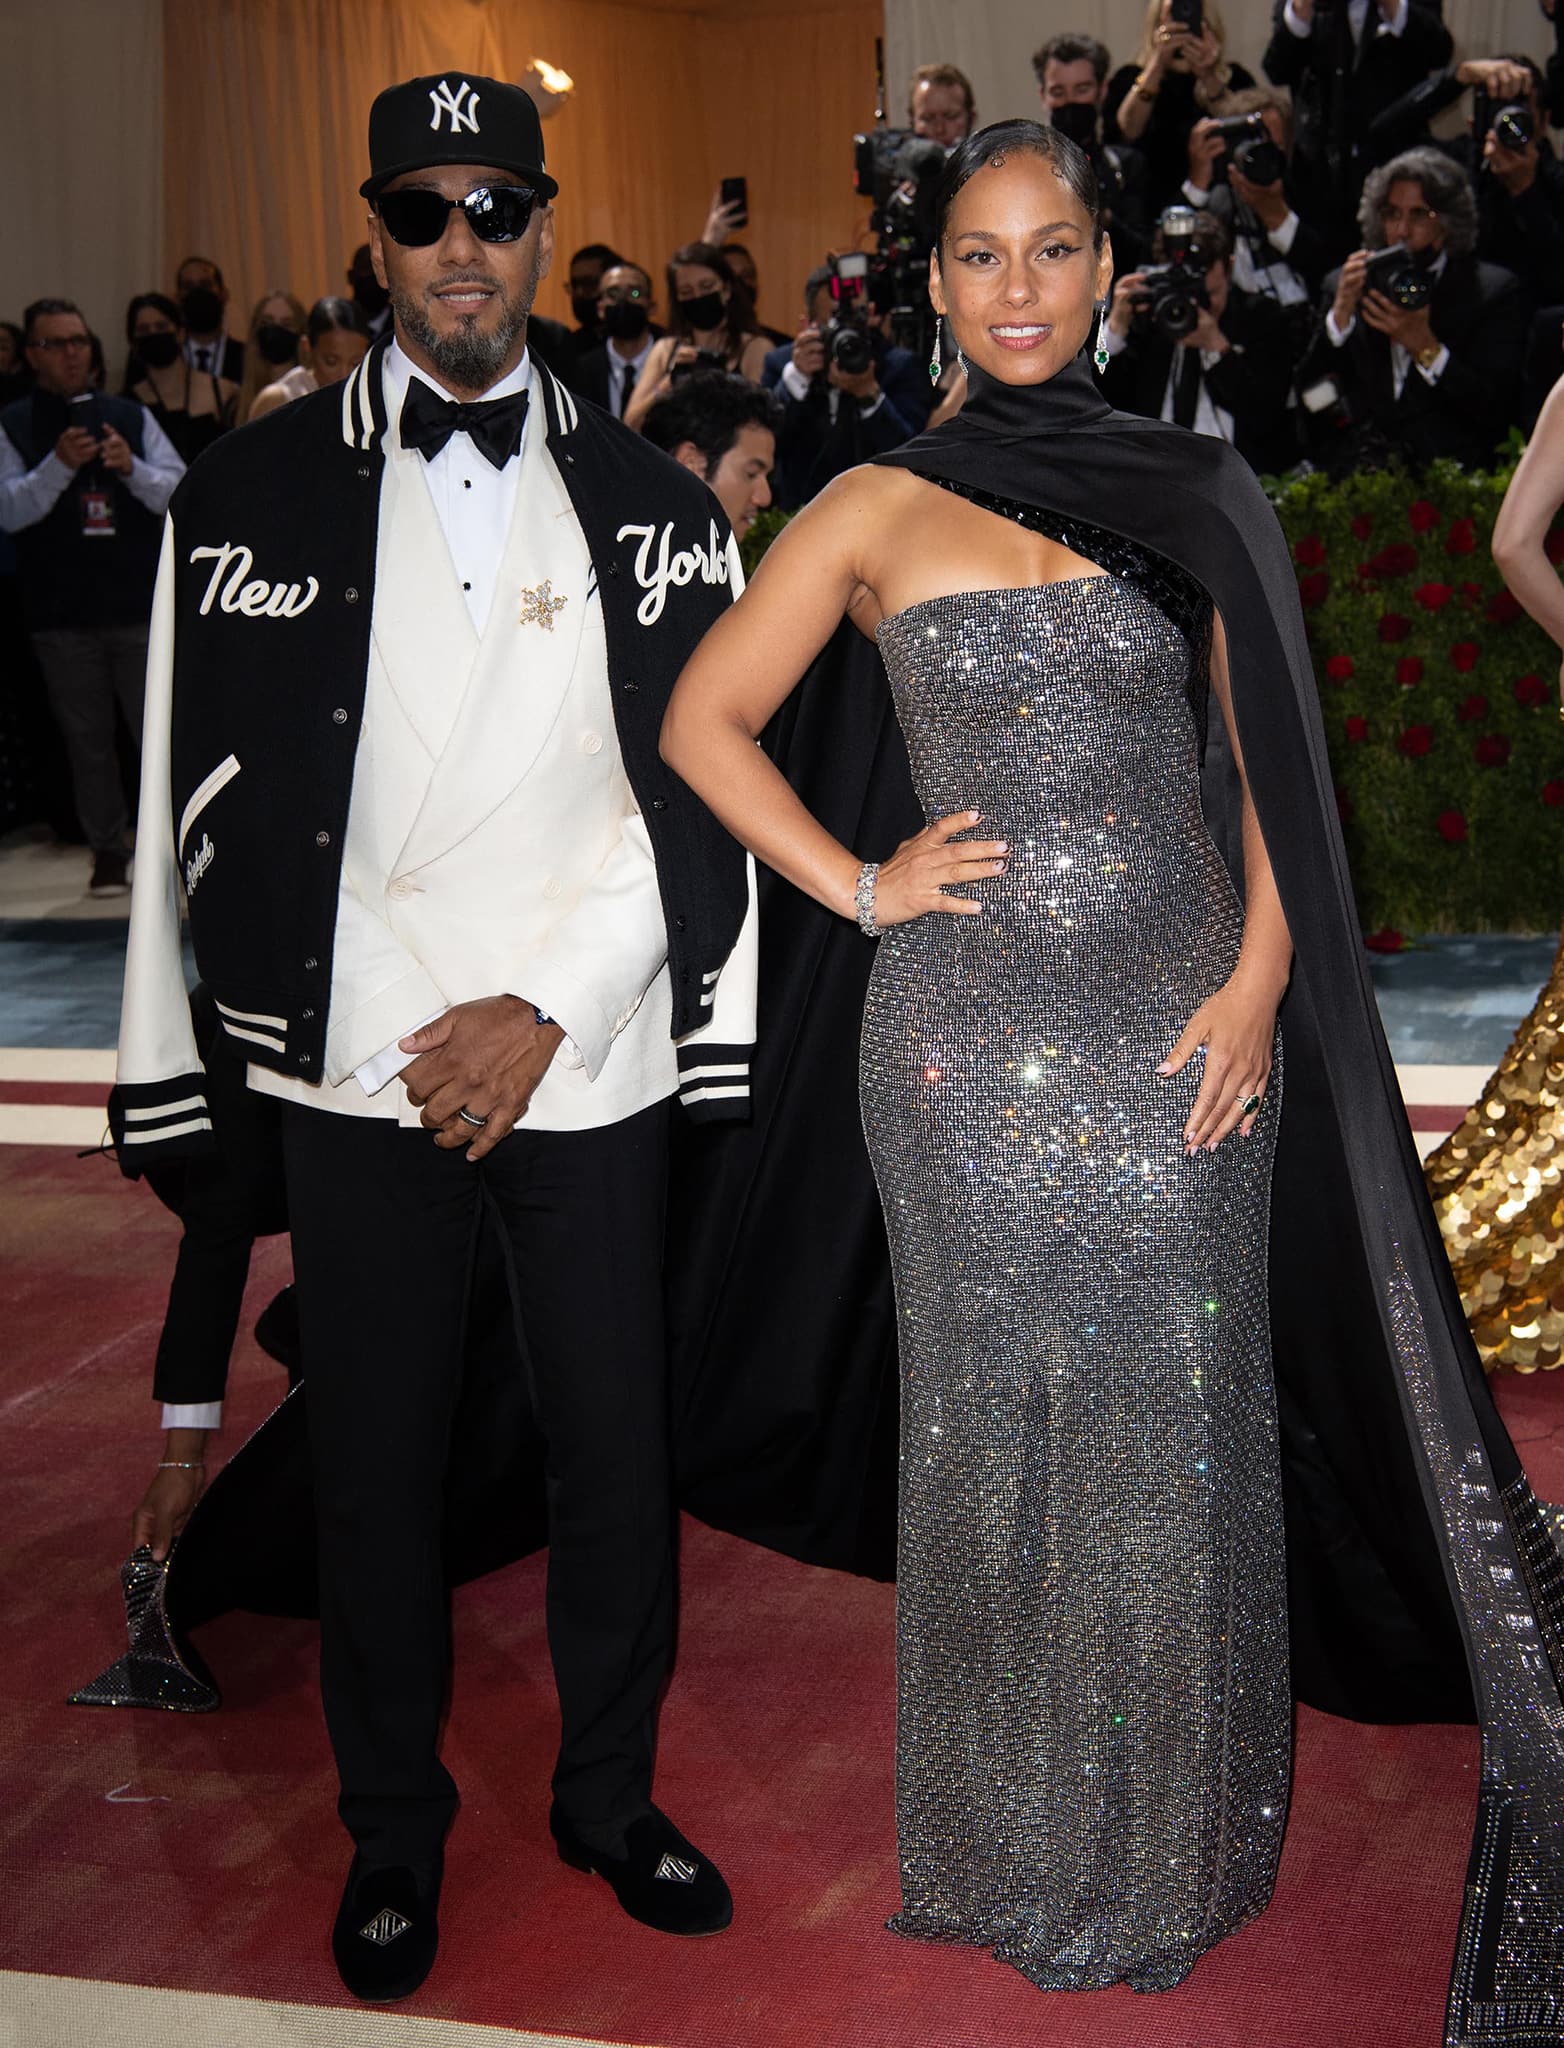 Alicia Keys' husband Swizz Beatz continues the New York City theme with Ralph Lauren NY Yankees leather jacket